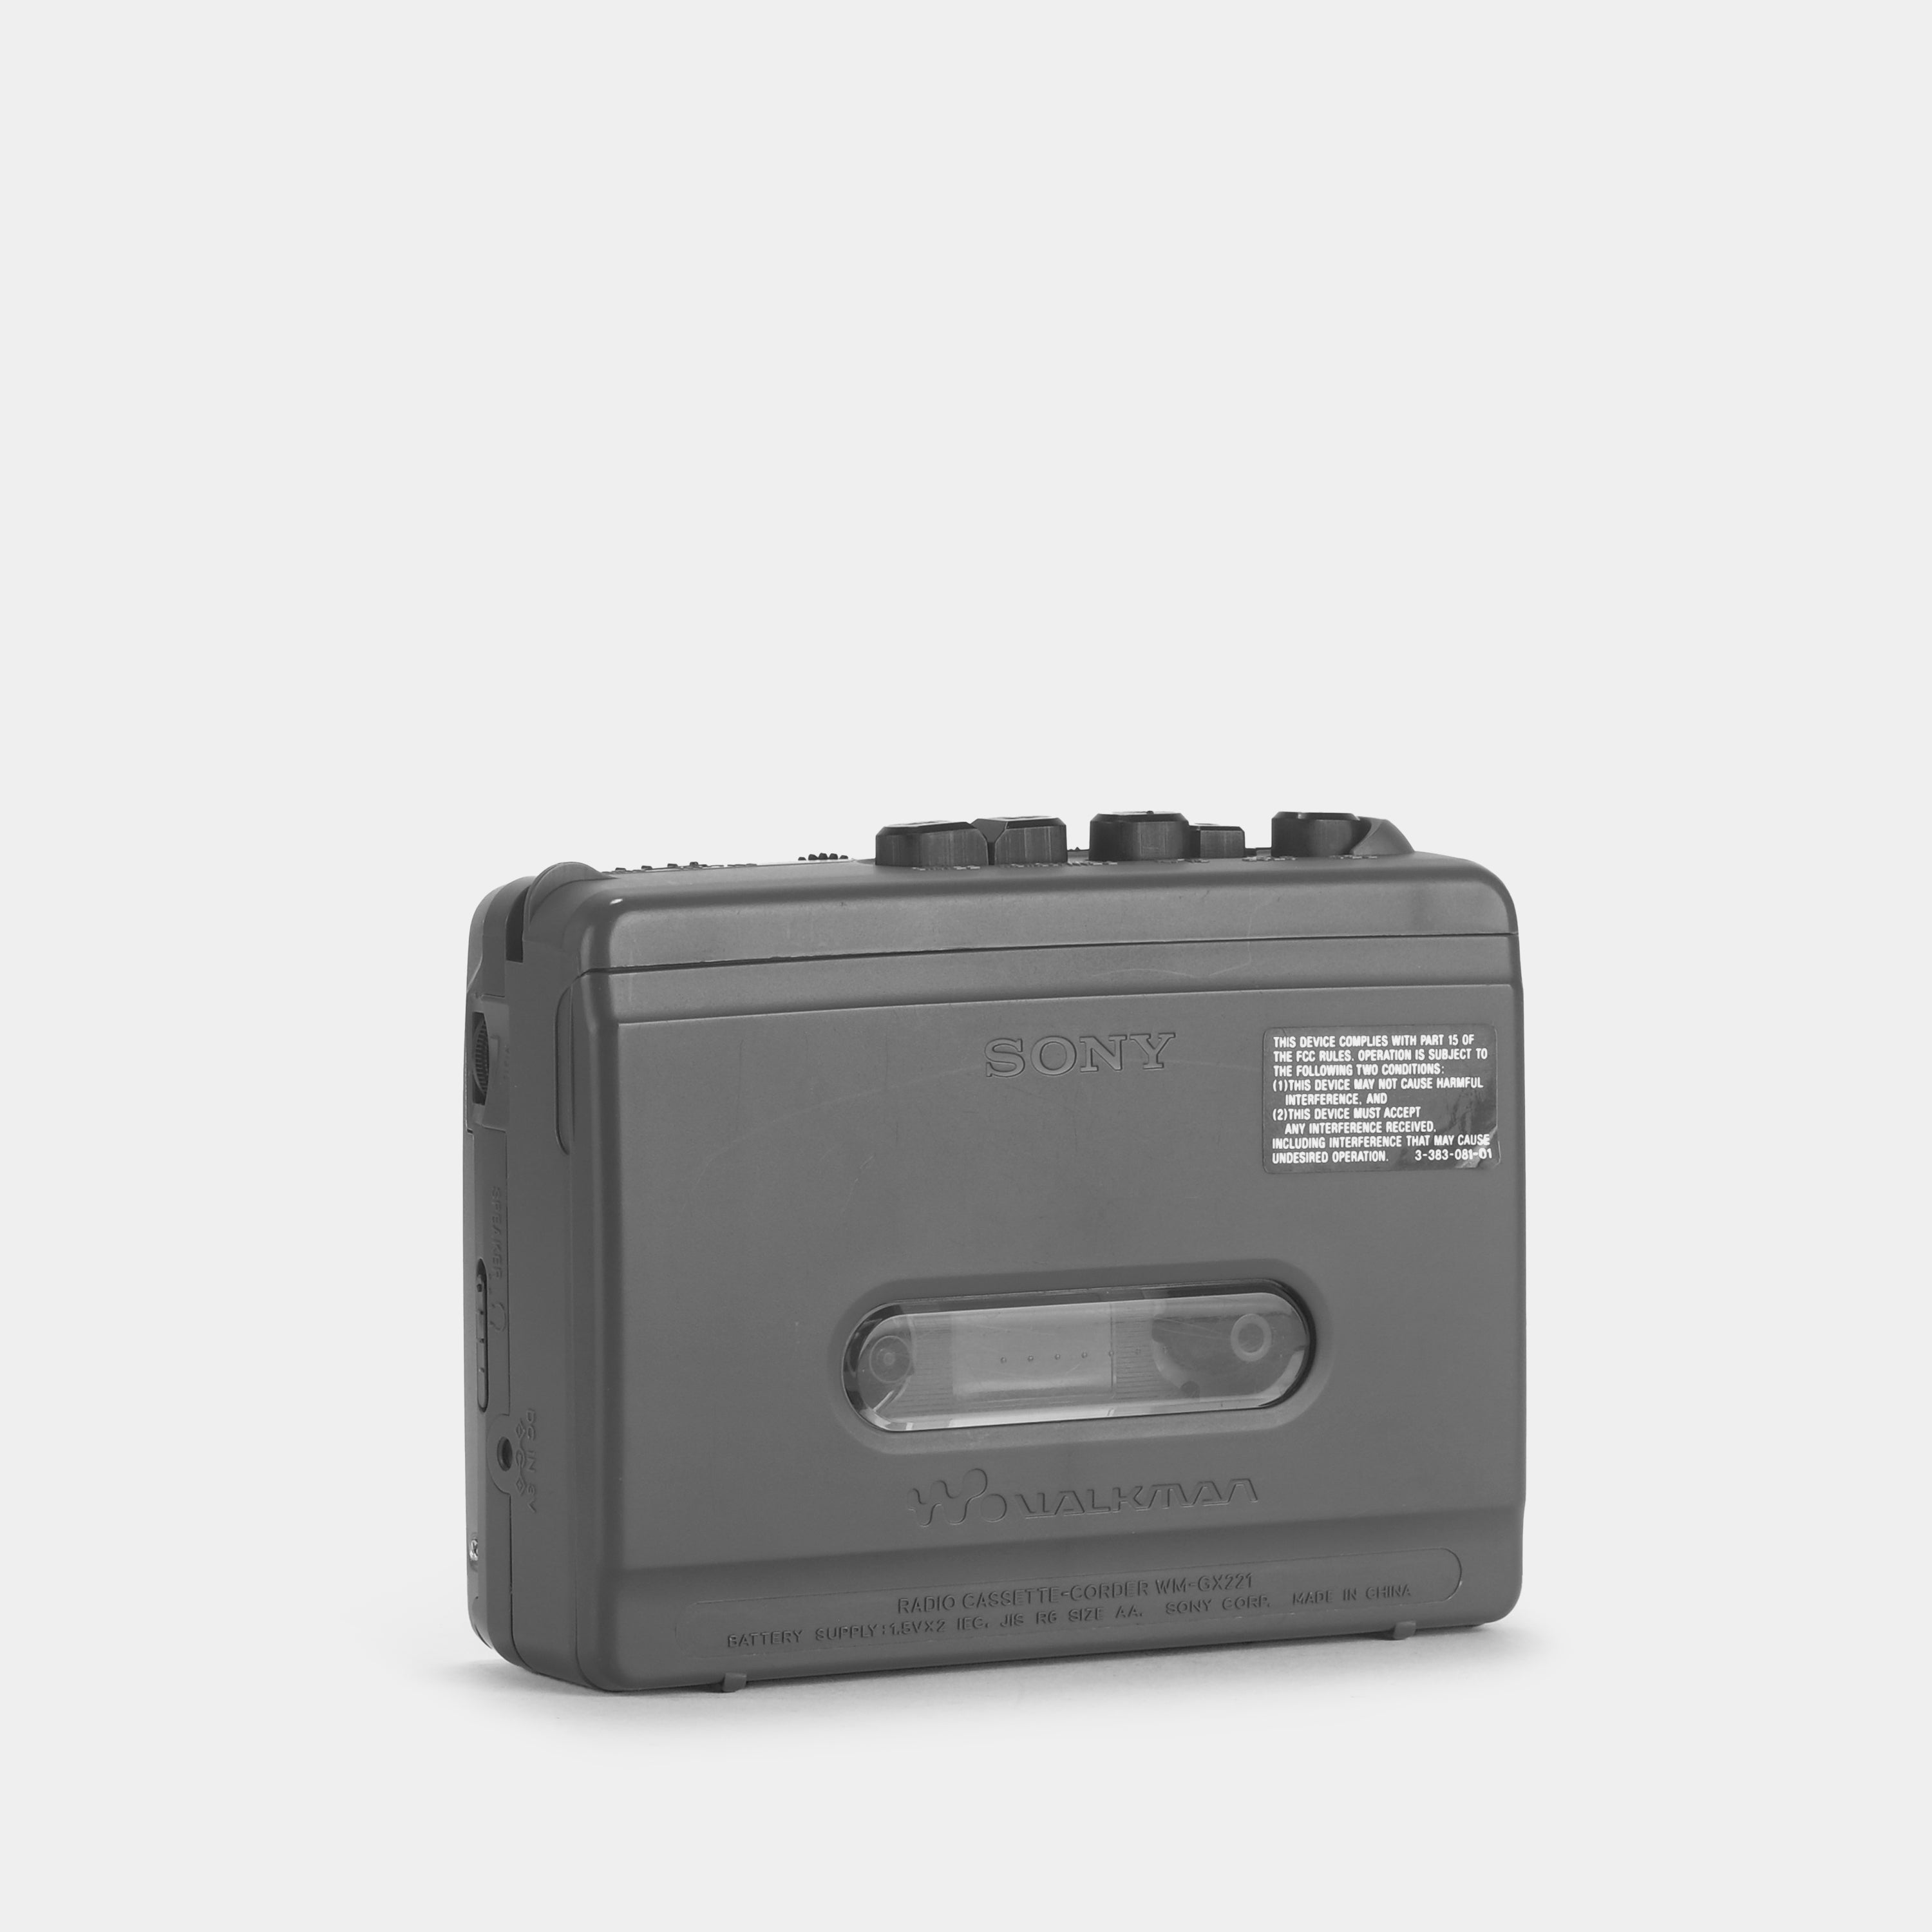 Sony Walkman WM-GX221 AM/FM Portable Cassette Player/Recorder